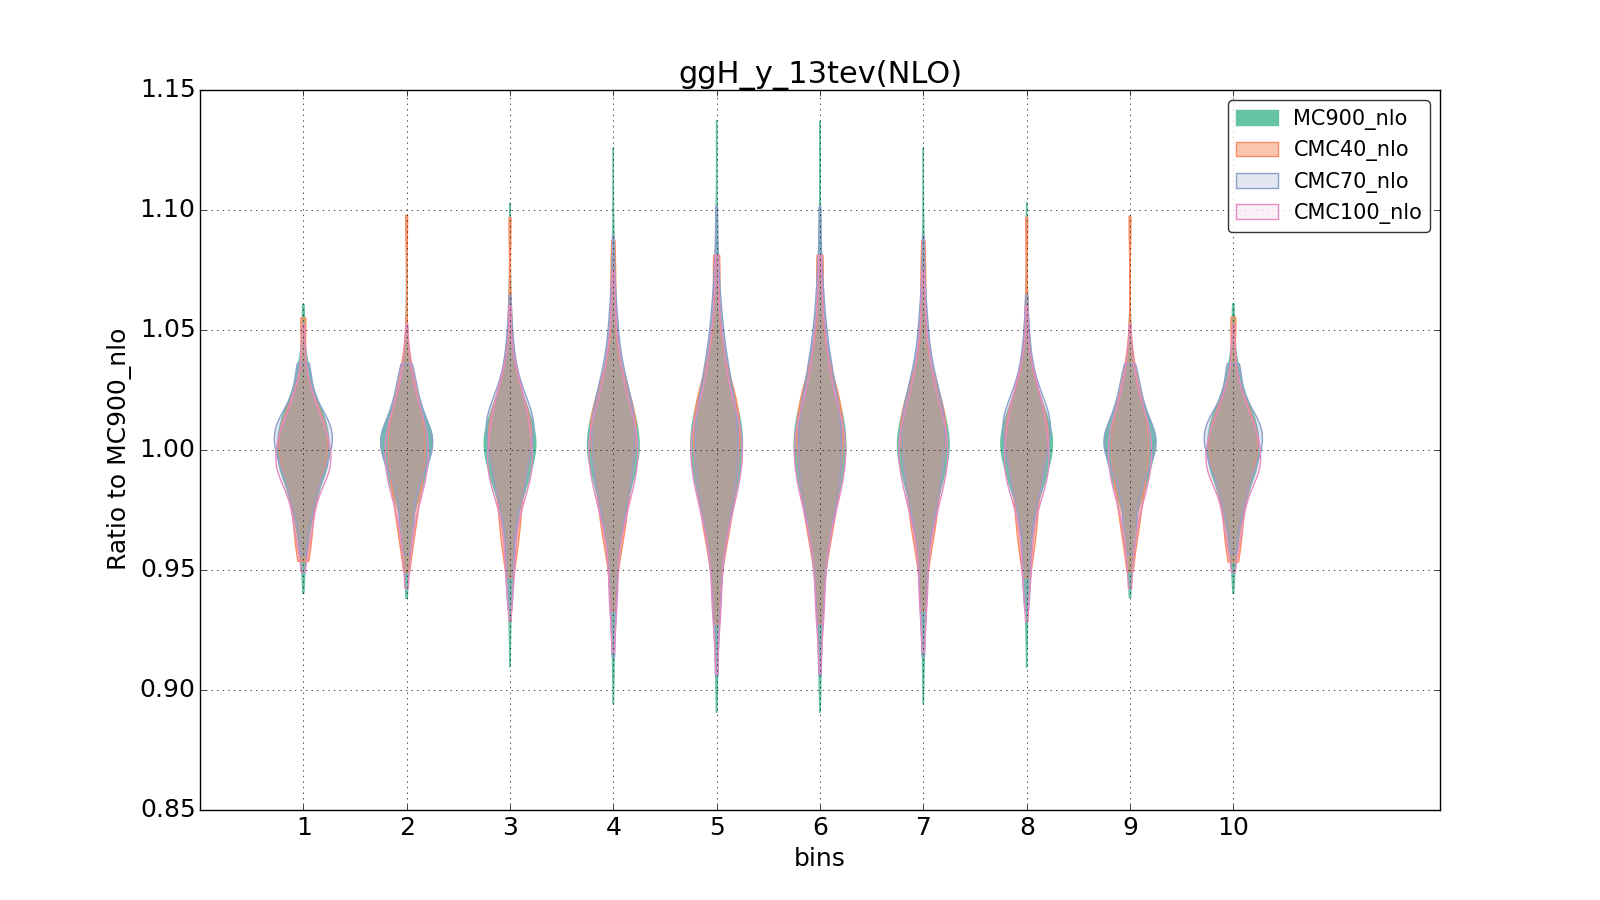 figure plots/CMCpheno/group_1_violinplot_ggH_y_13tev(NLO).png